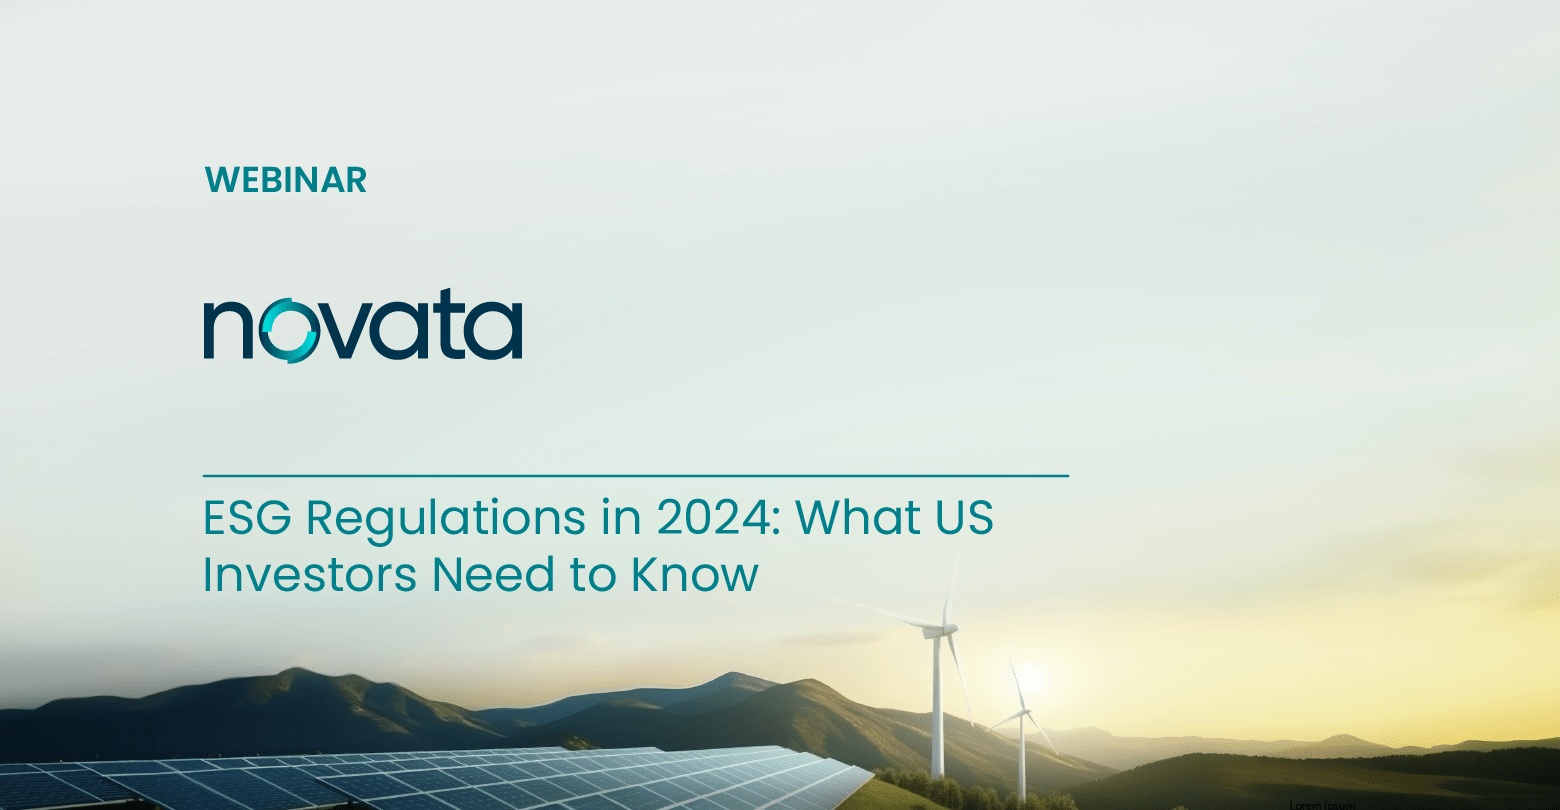 Novata Webinar. ESG Regulations in 2024: What US Investors Need to Know